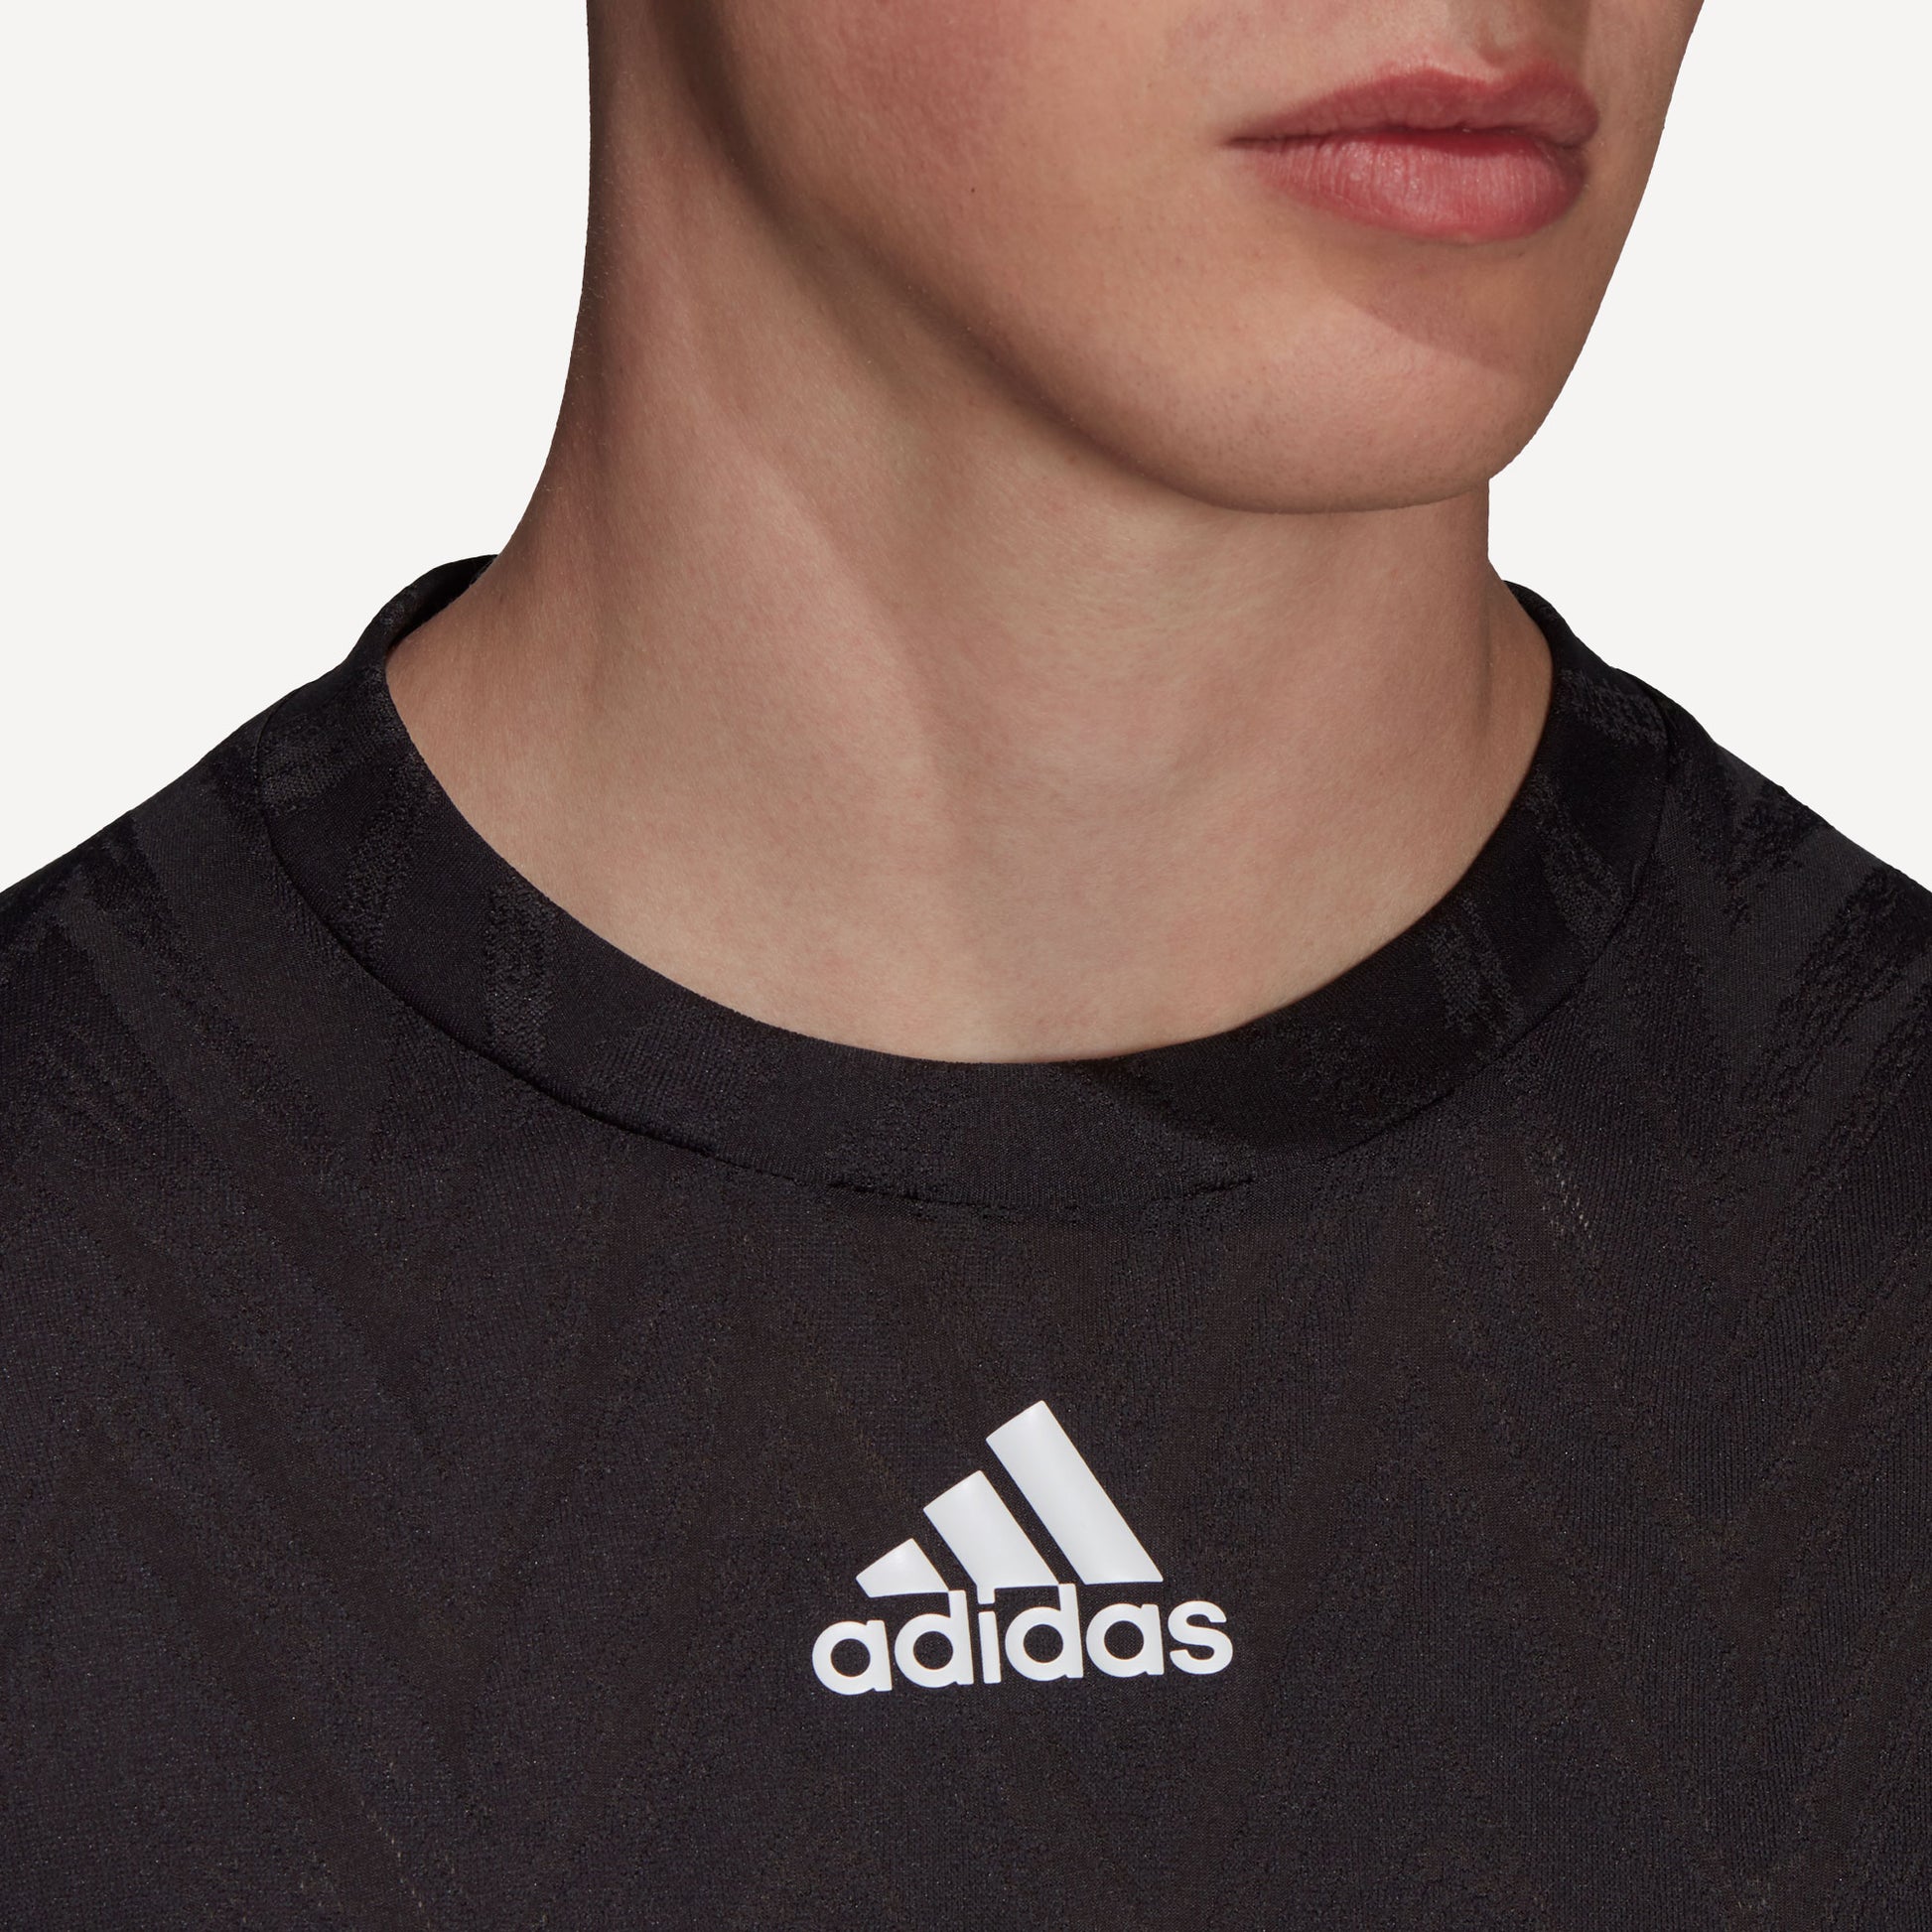 adidas Freelift Primeblue Men's Tennis Shirt Black (4)